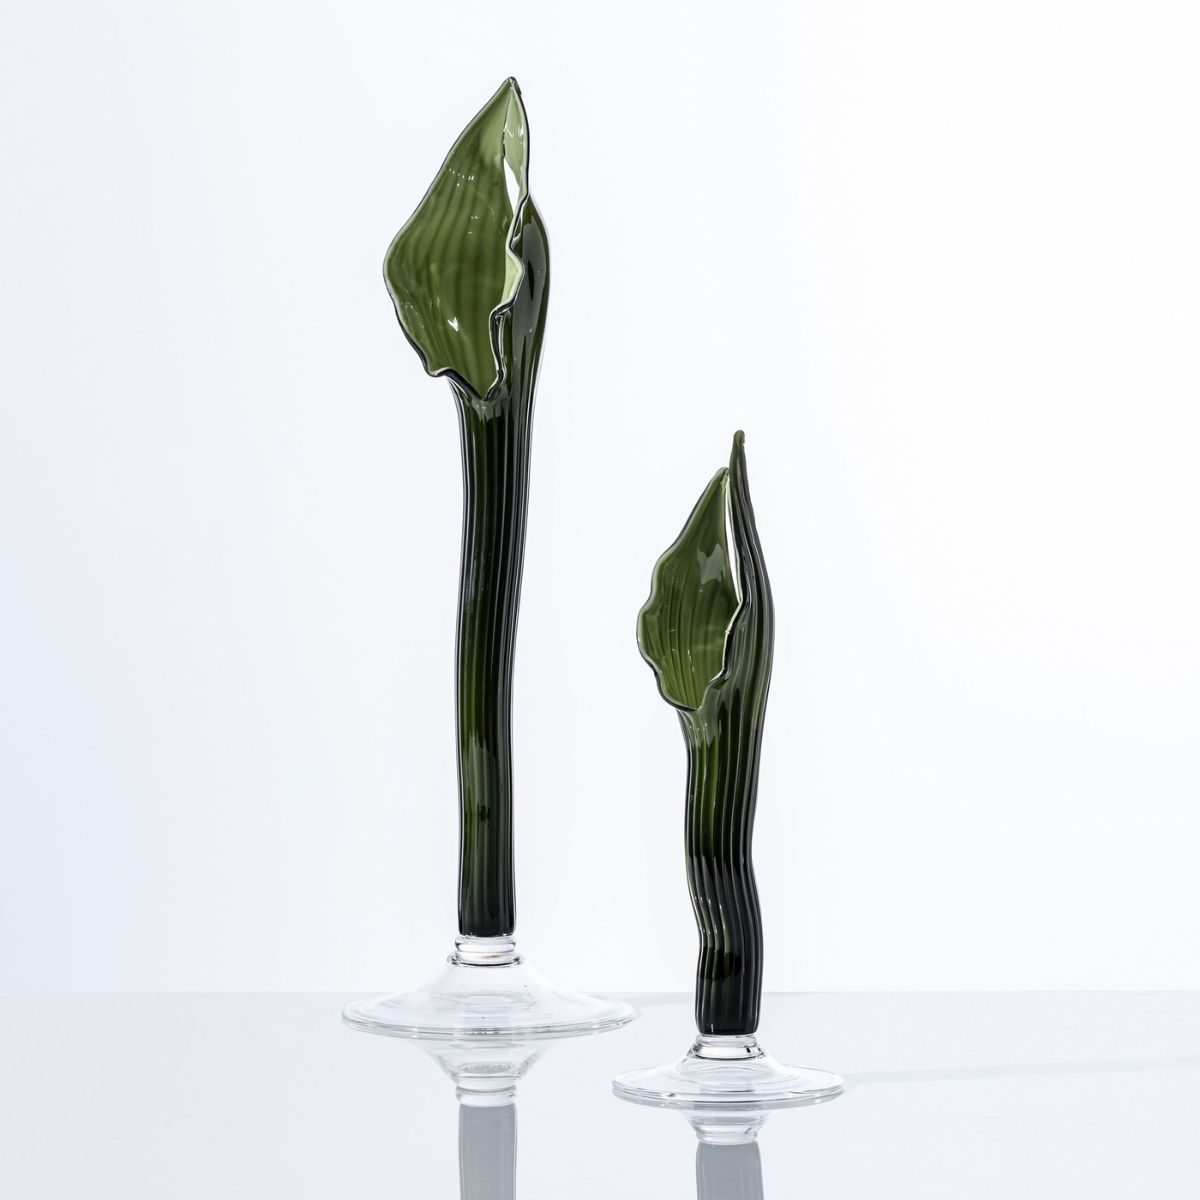 Chrysalis - Venini Glass Vases by Frédéric Dupré at Homo Faber Blossoming Beauty - on Thursd